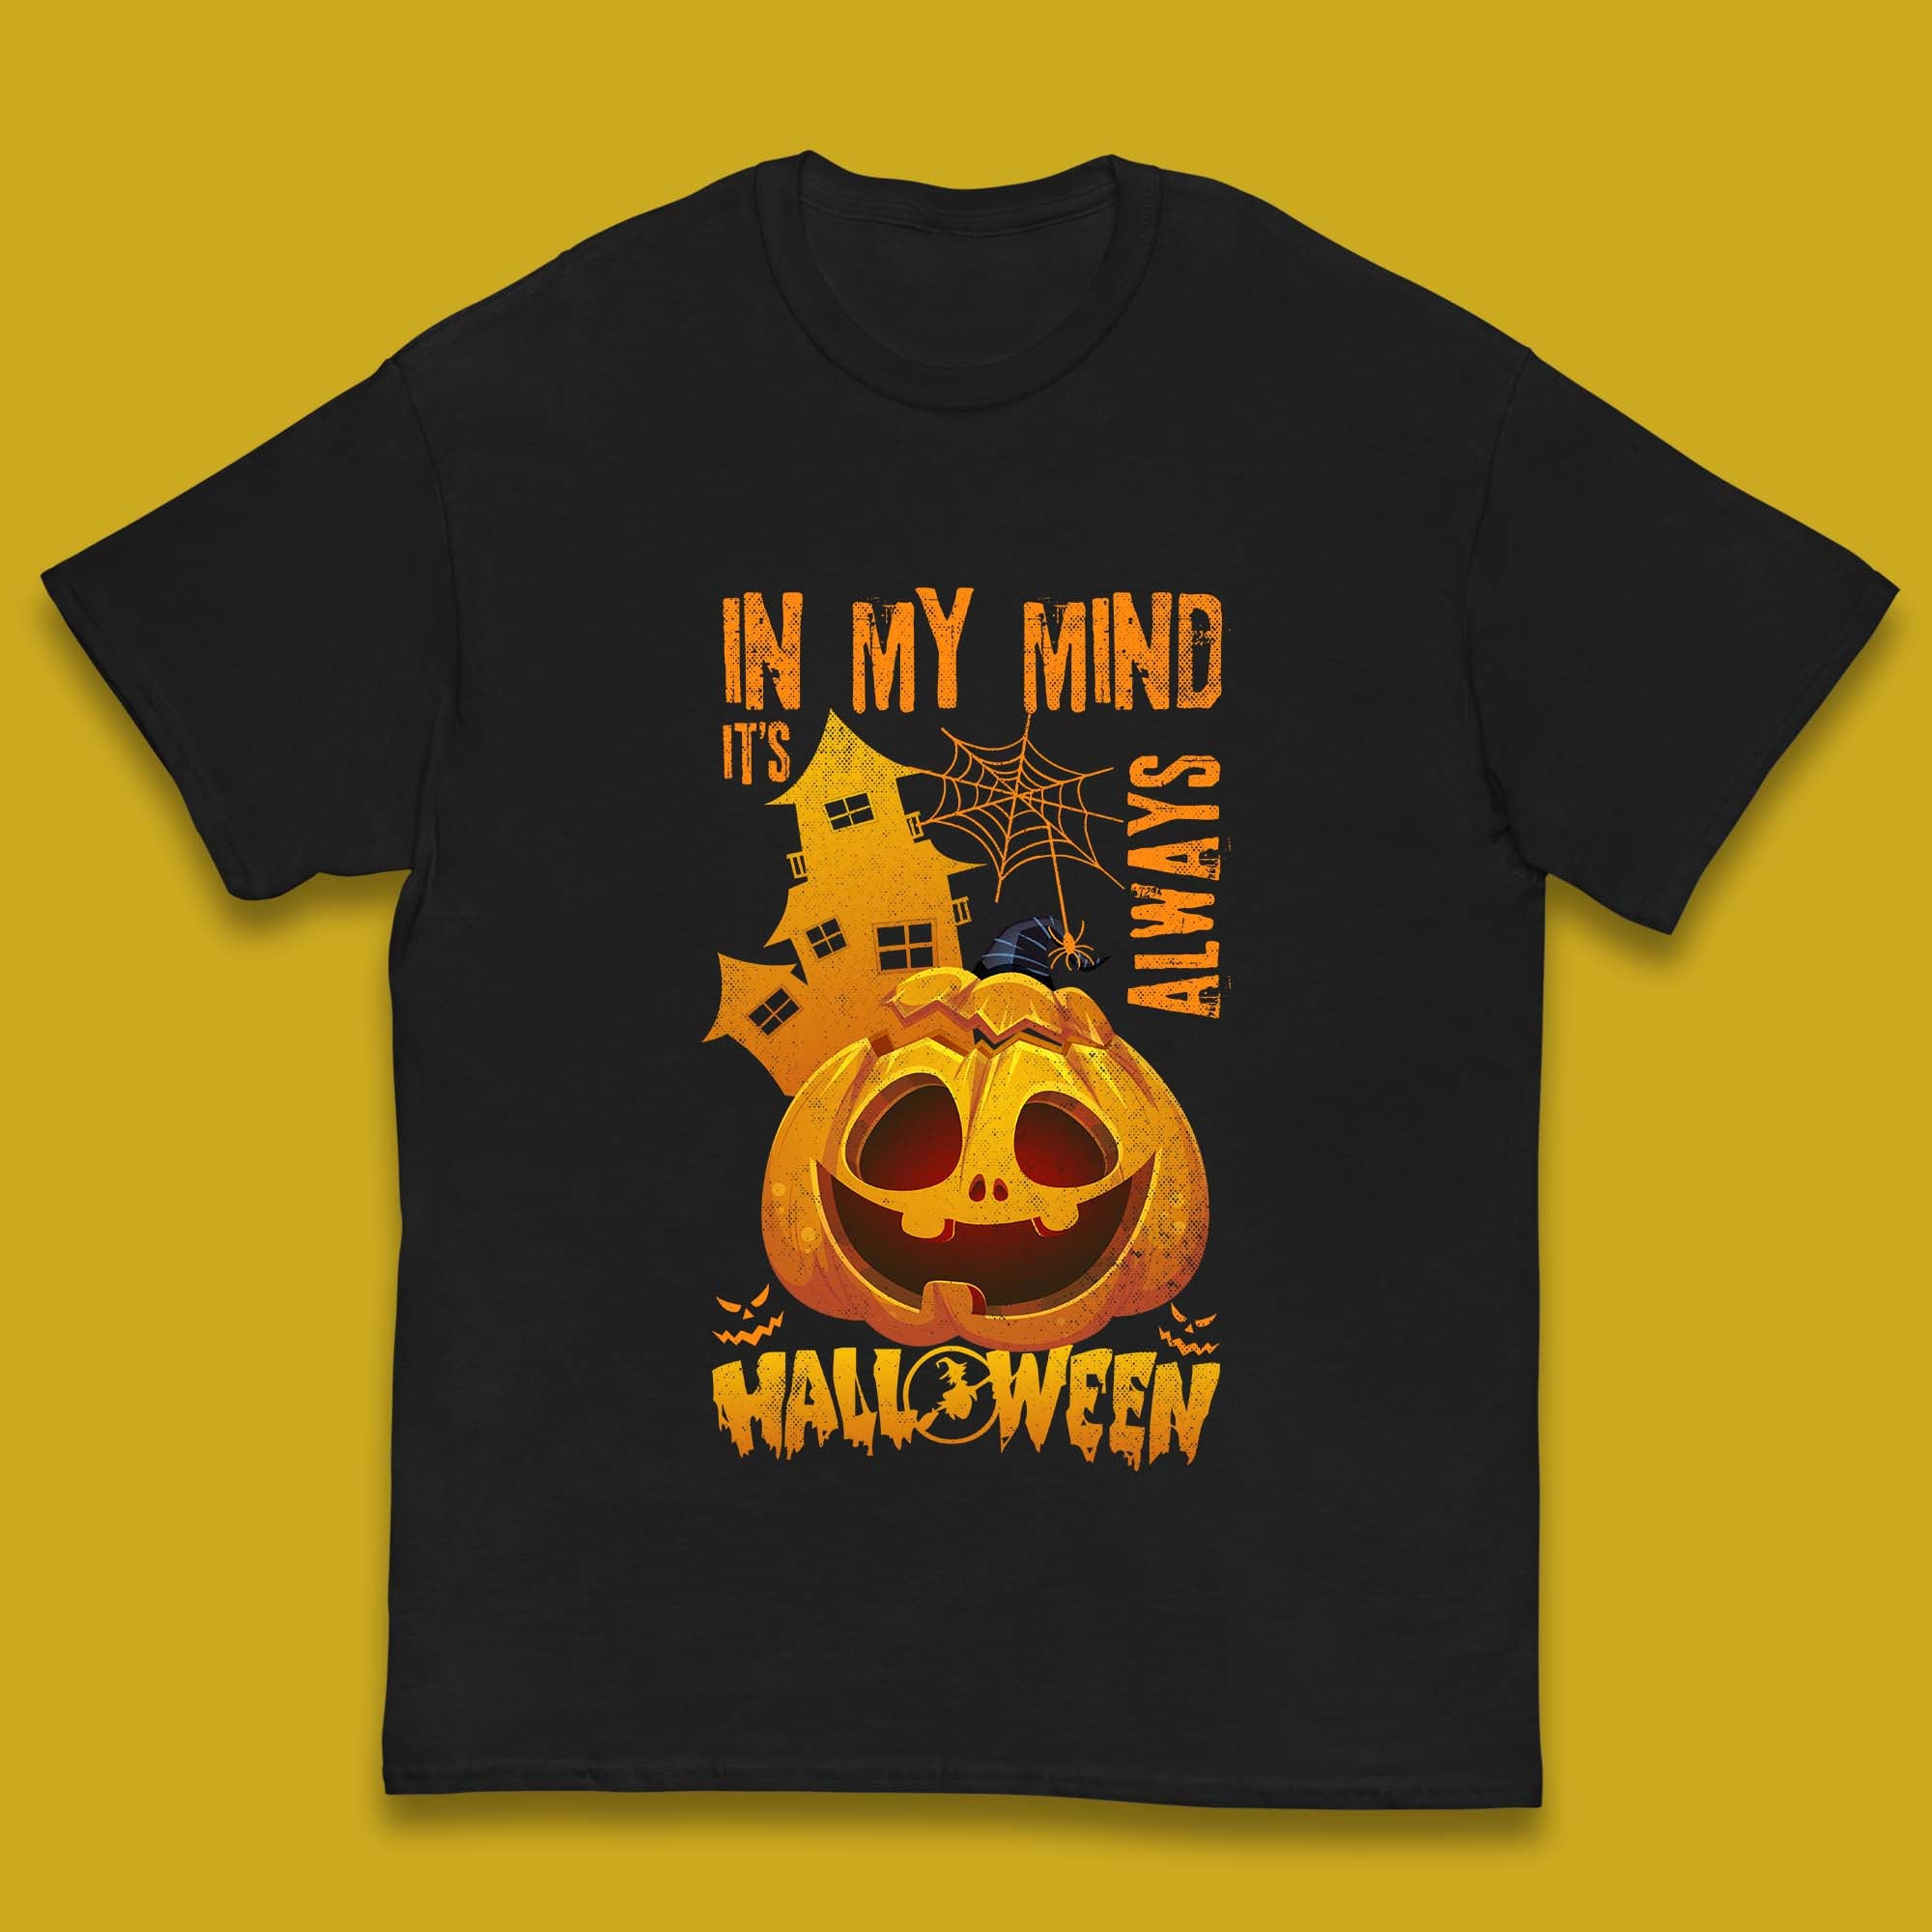 In My Mind It's Always Halloween Haunted House Horror Scary Monster Pumpkin Kids T Shirt